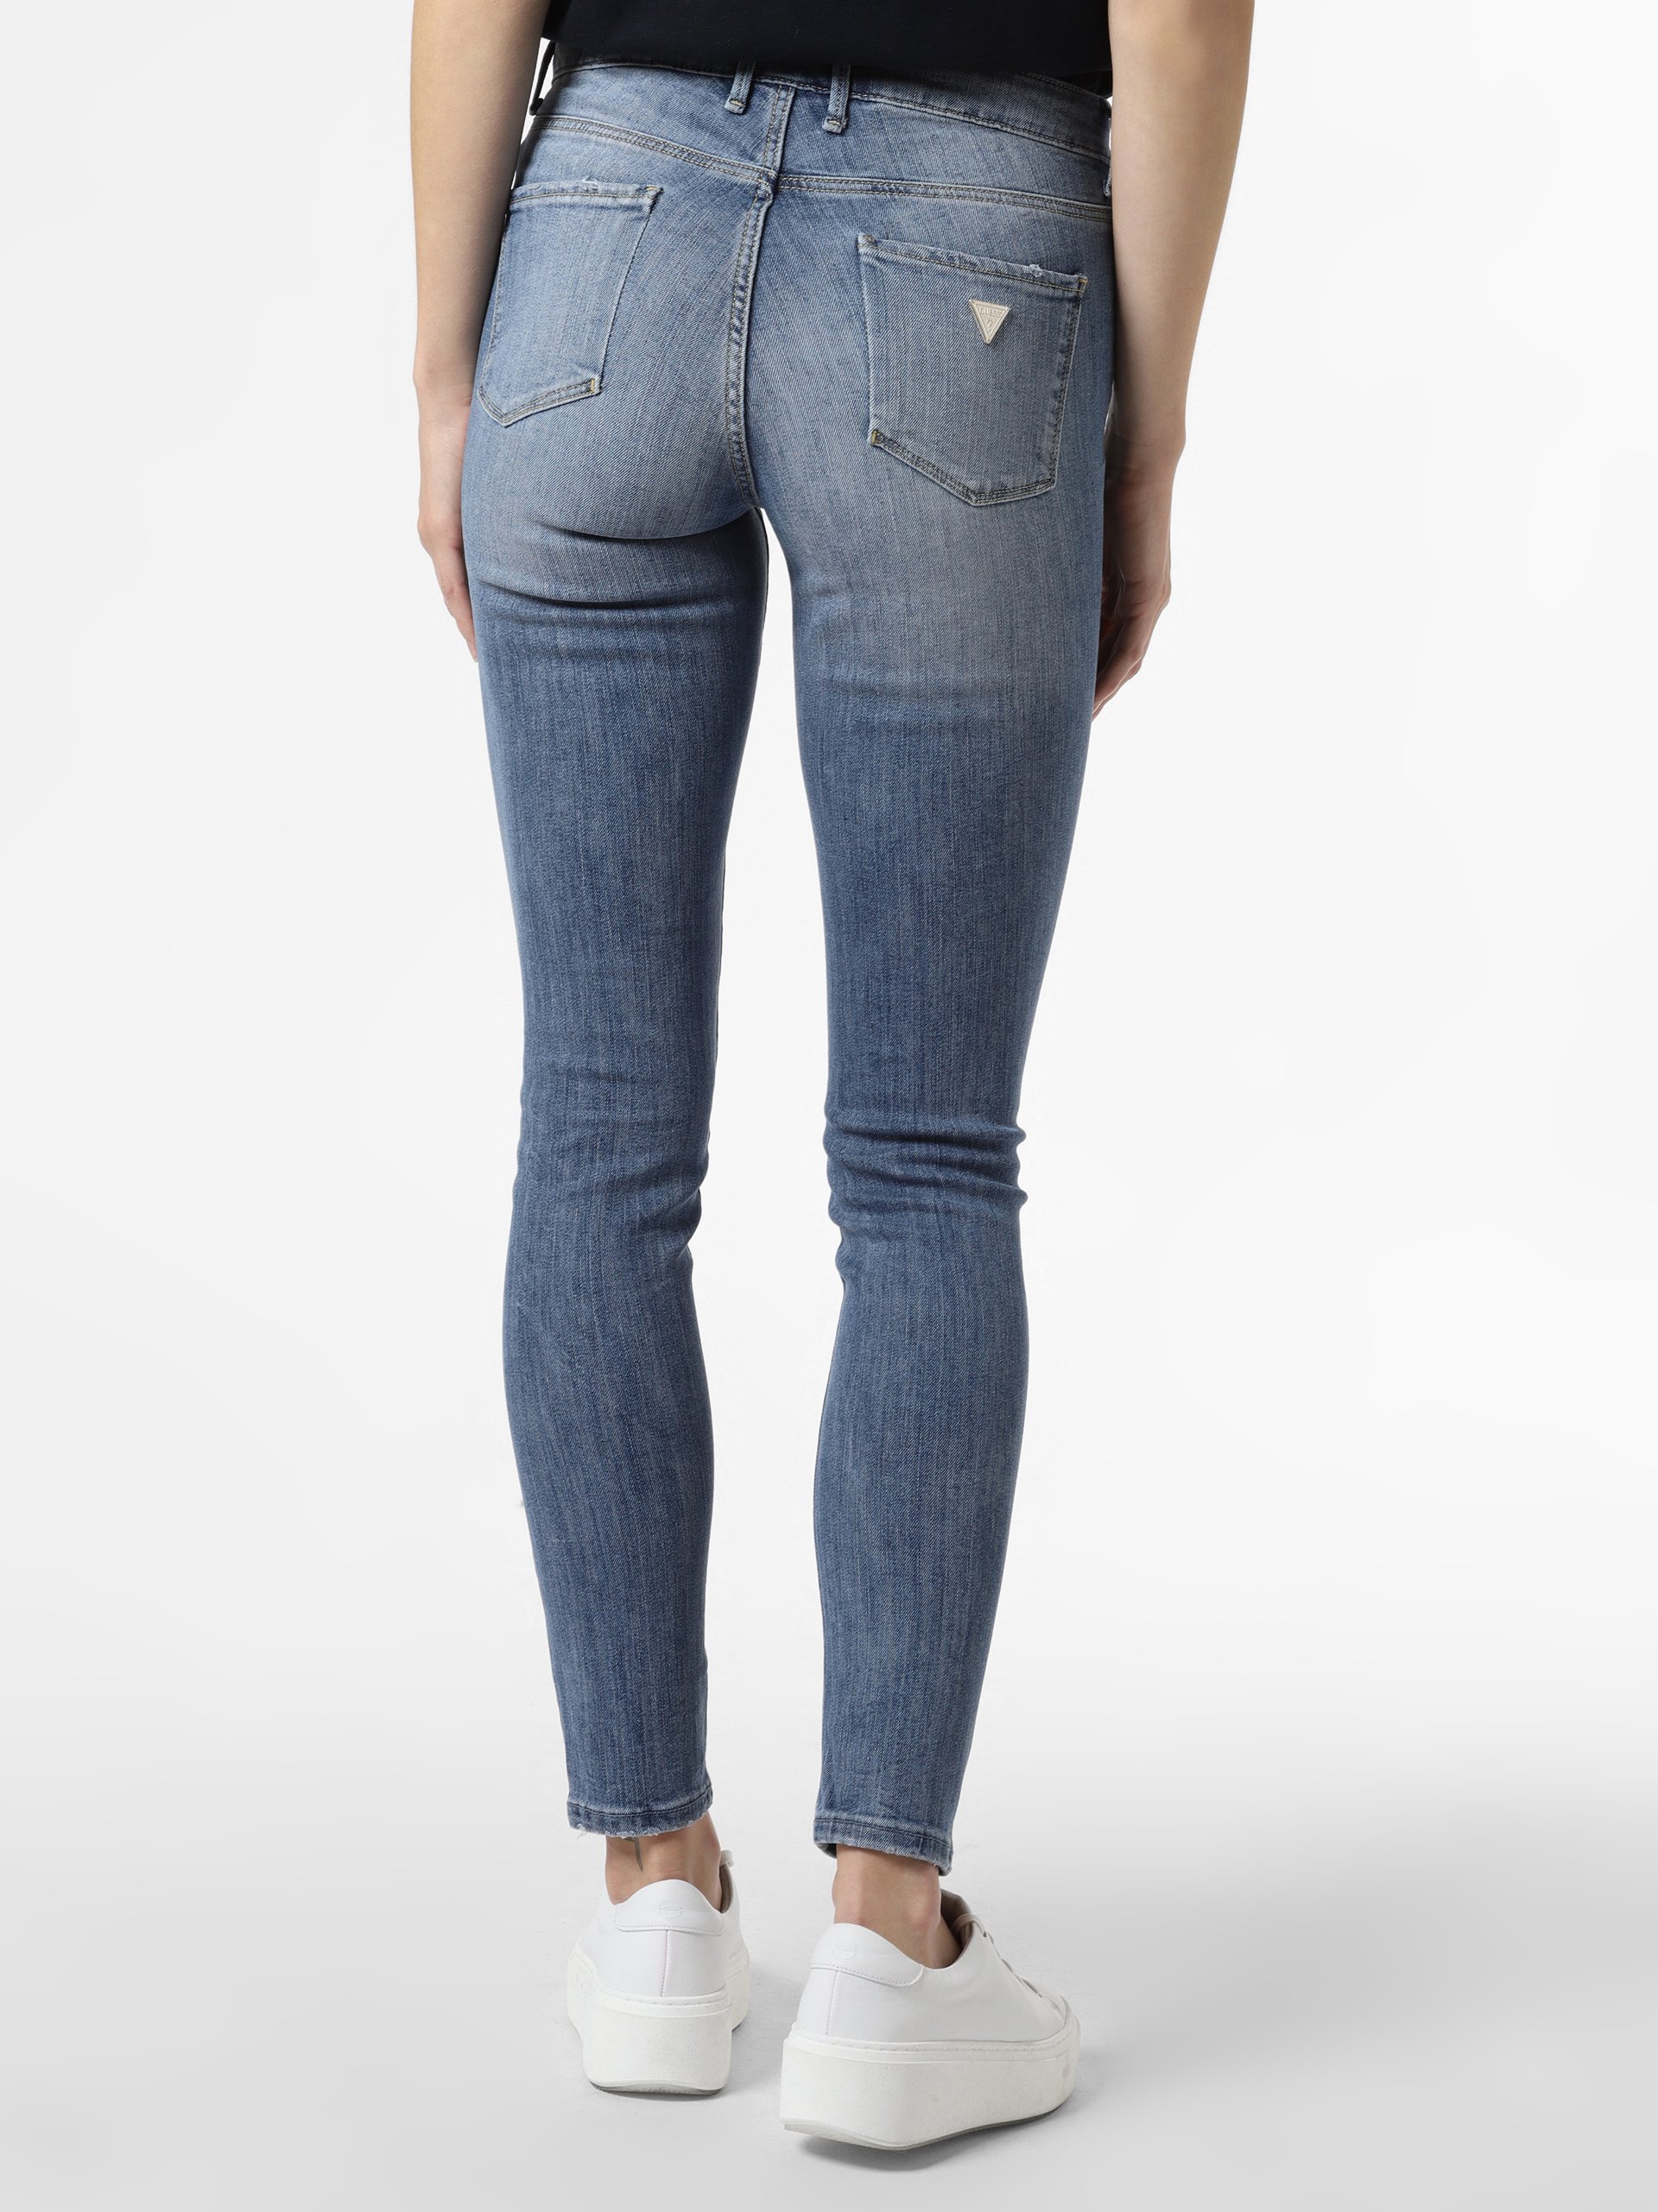 GUESS Damen Jeans online kaufen | VANGRAAF.COM